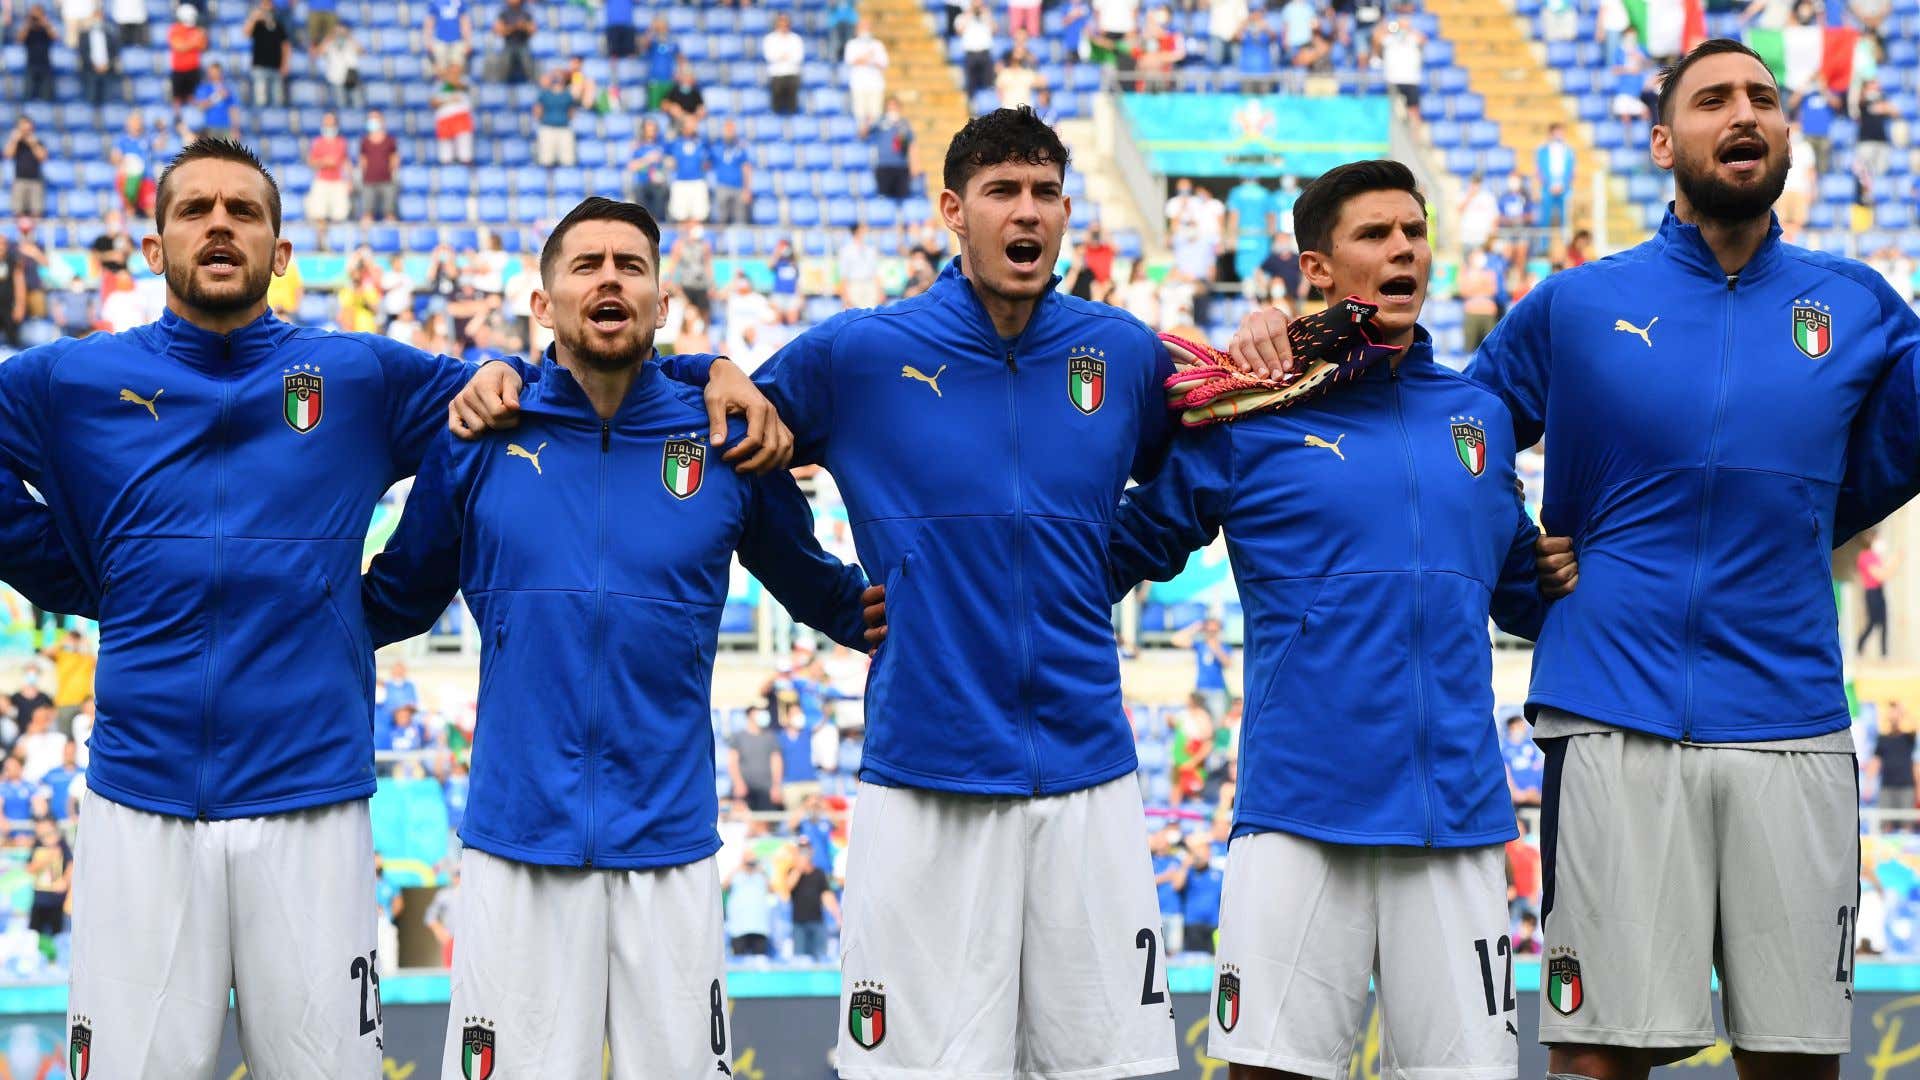 Italian players Italy Wales European Championship